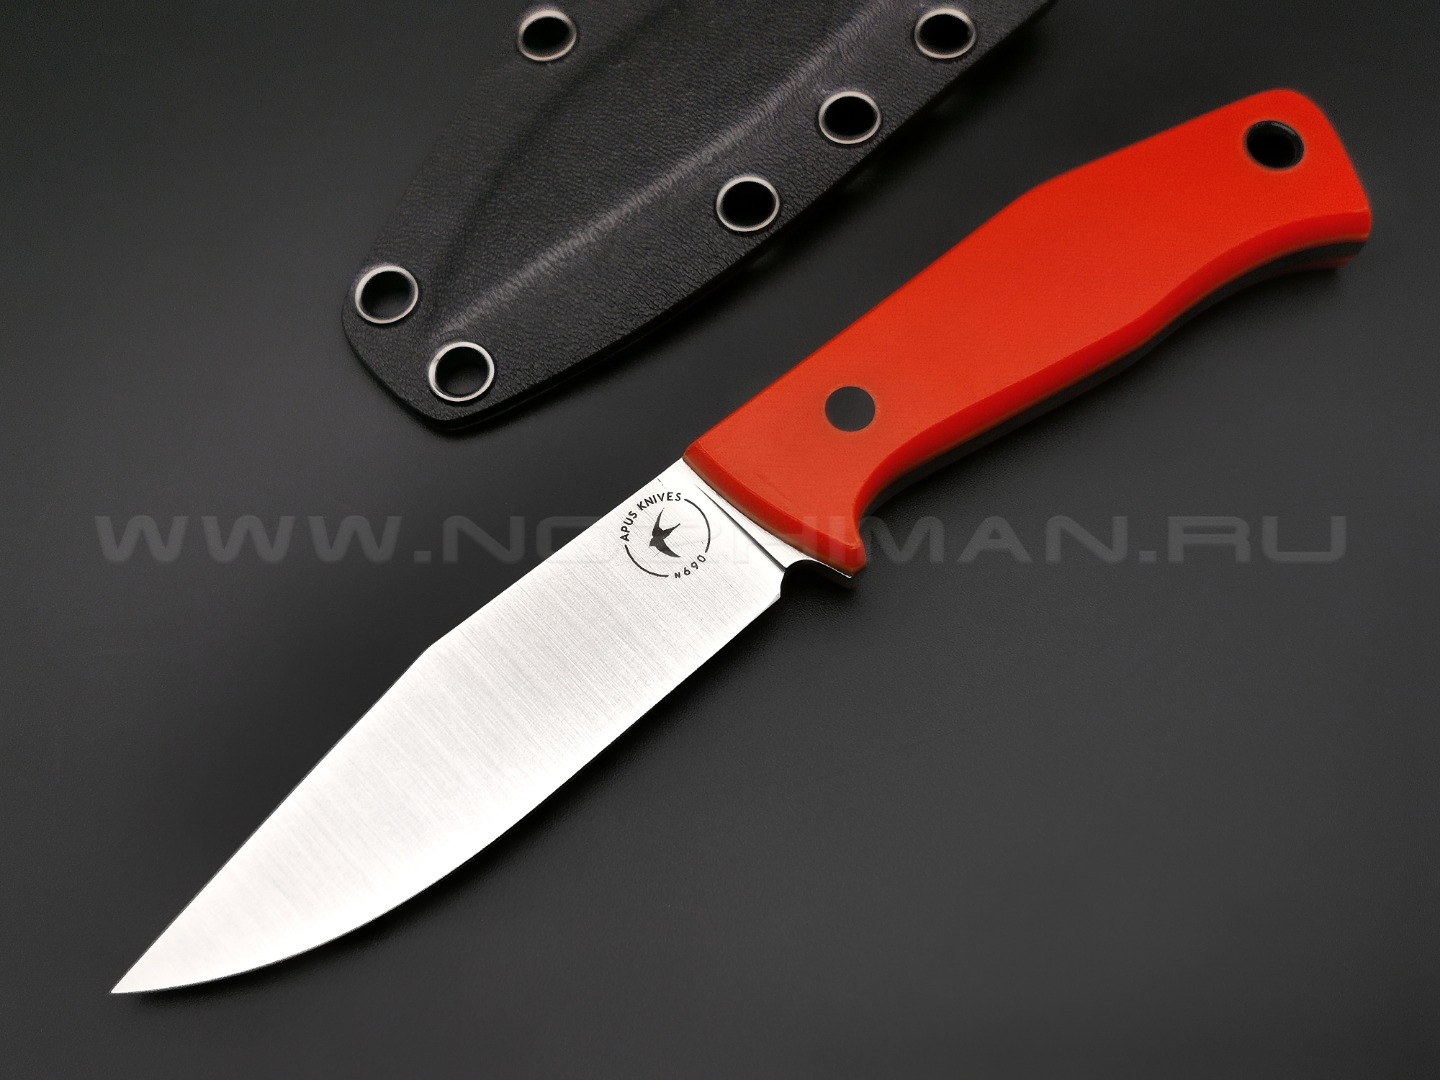 Apus Knives нож Firefly сталь N690, рукоять G10 orange, люминофор